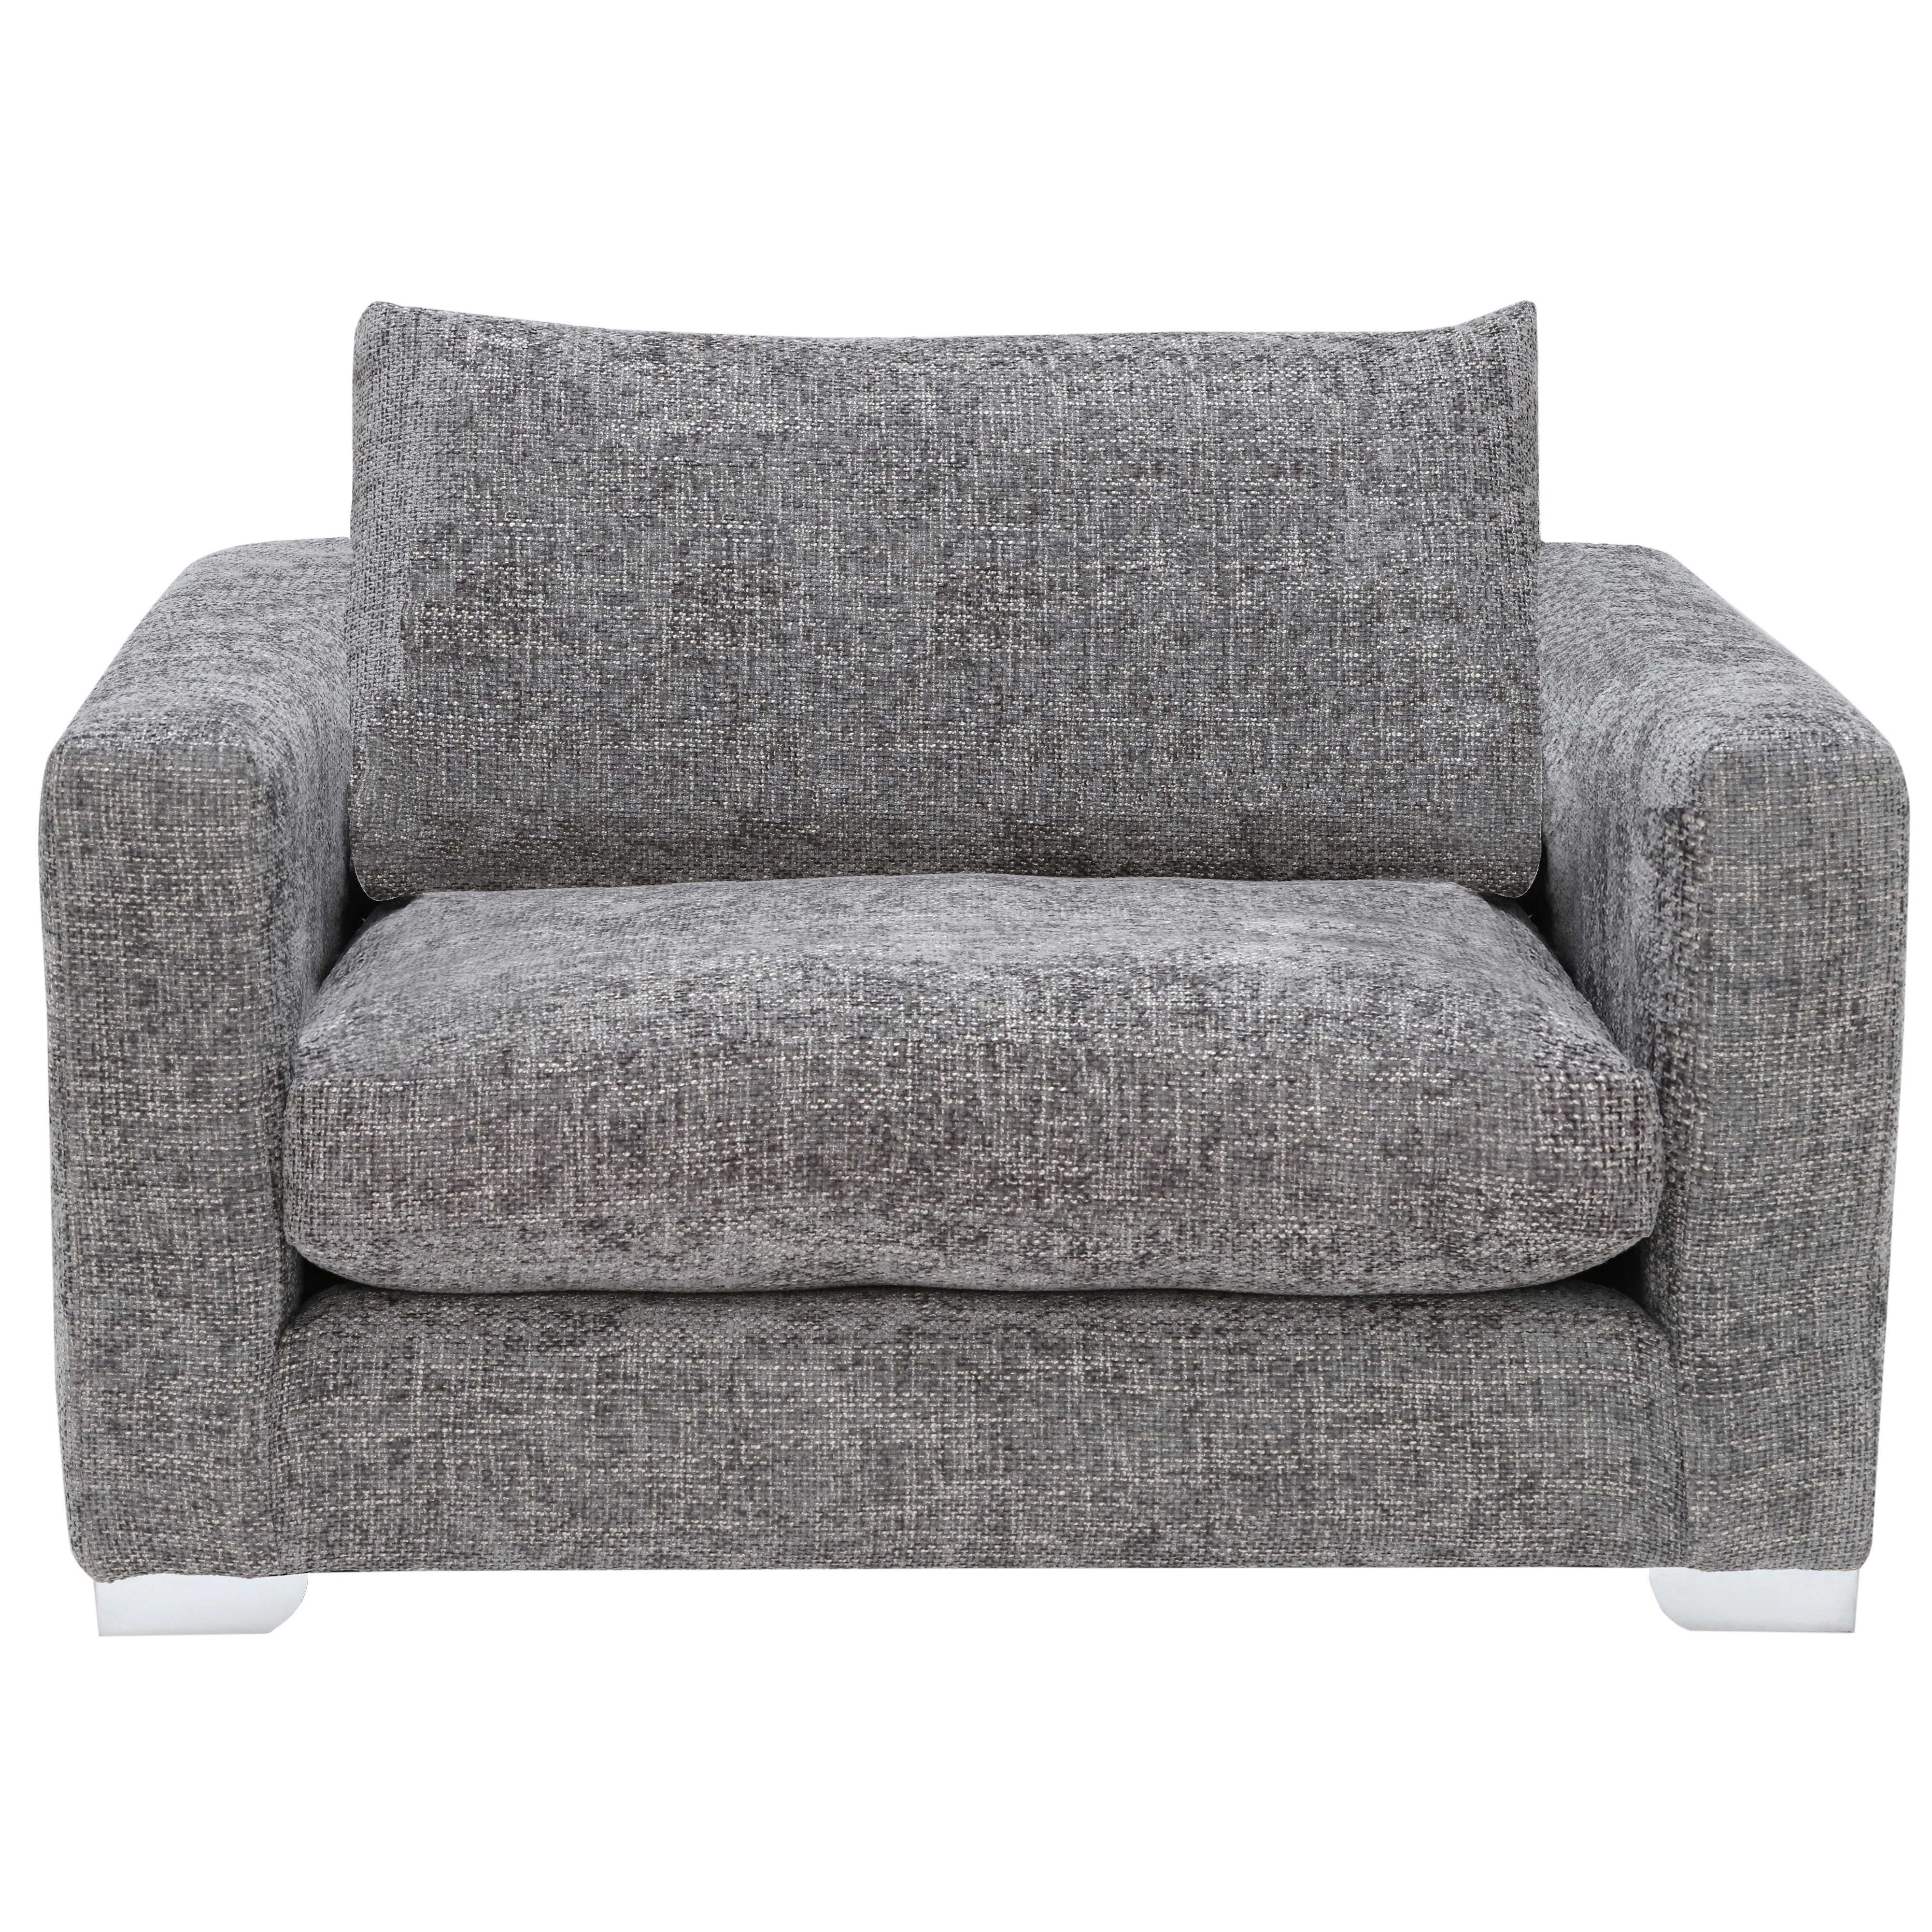 Fontella Snuggler Snuggle Chair, Grey Fabric | Barker & Stonehouse